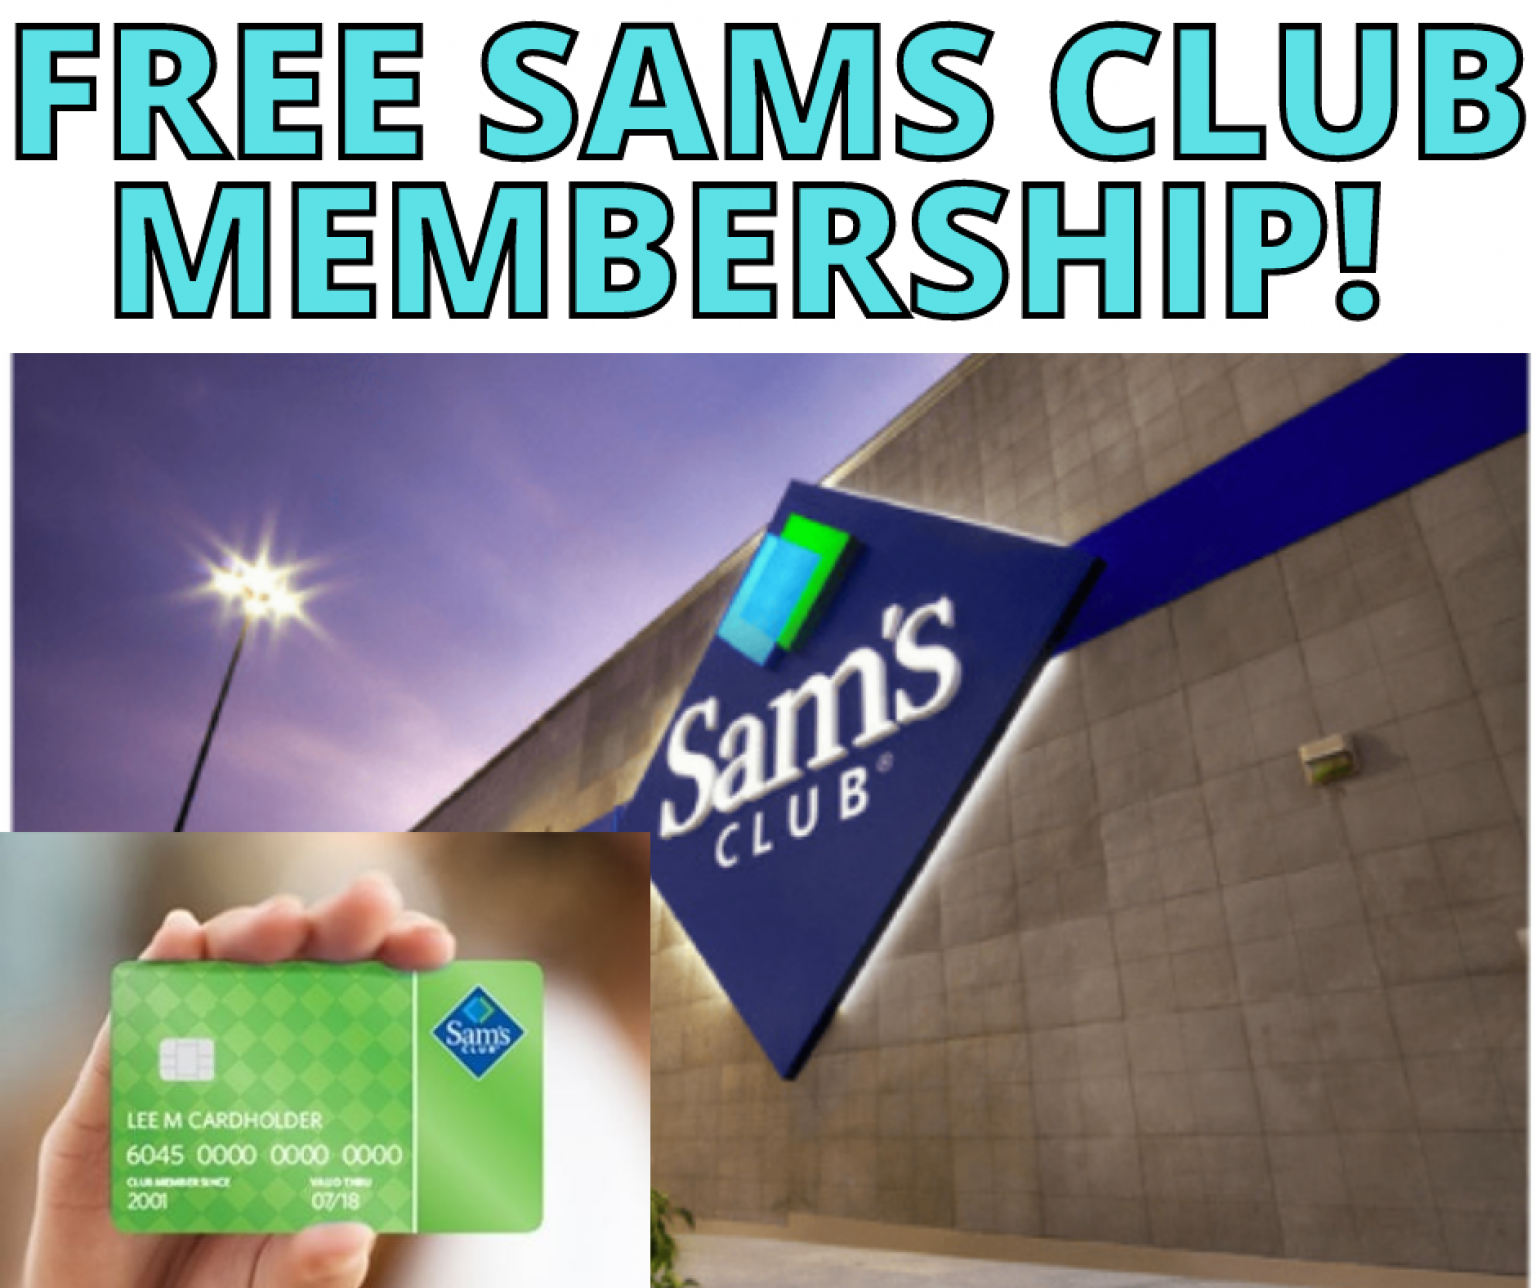 Sam’s Club FREE MEMBERSHIP! 45 OFF 45!! Glitchndealz